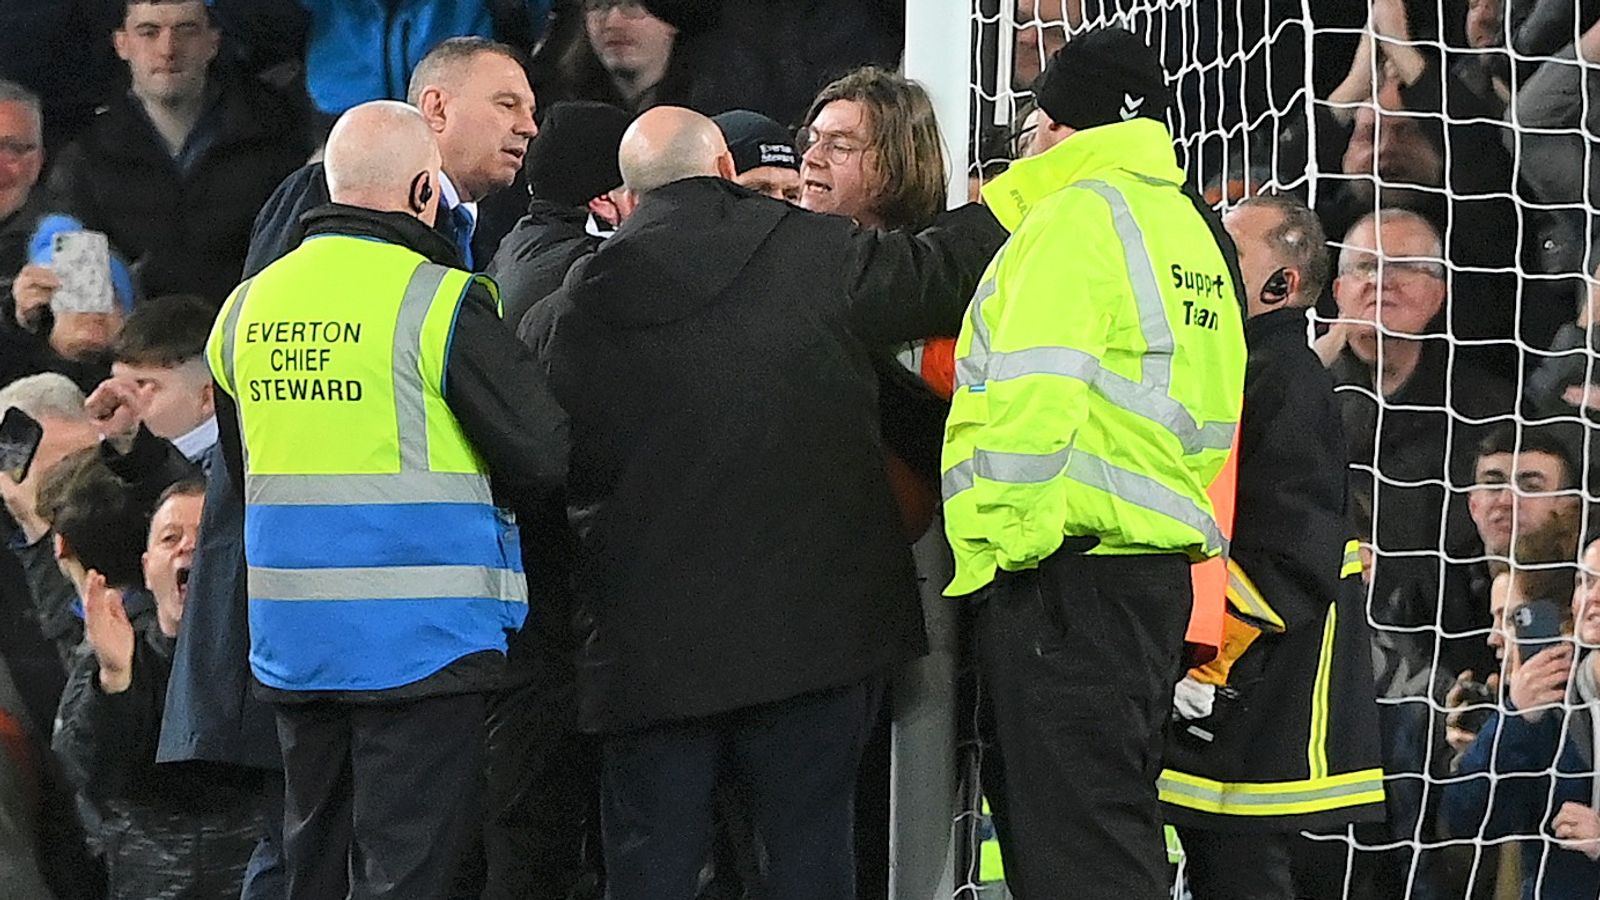 Pertandingan Everton-Newcastle ditunda setelah pria mengikat dirinya ke gawang di protes Goodison Park |  berita sepak bola